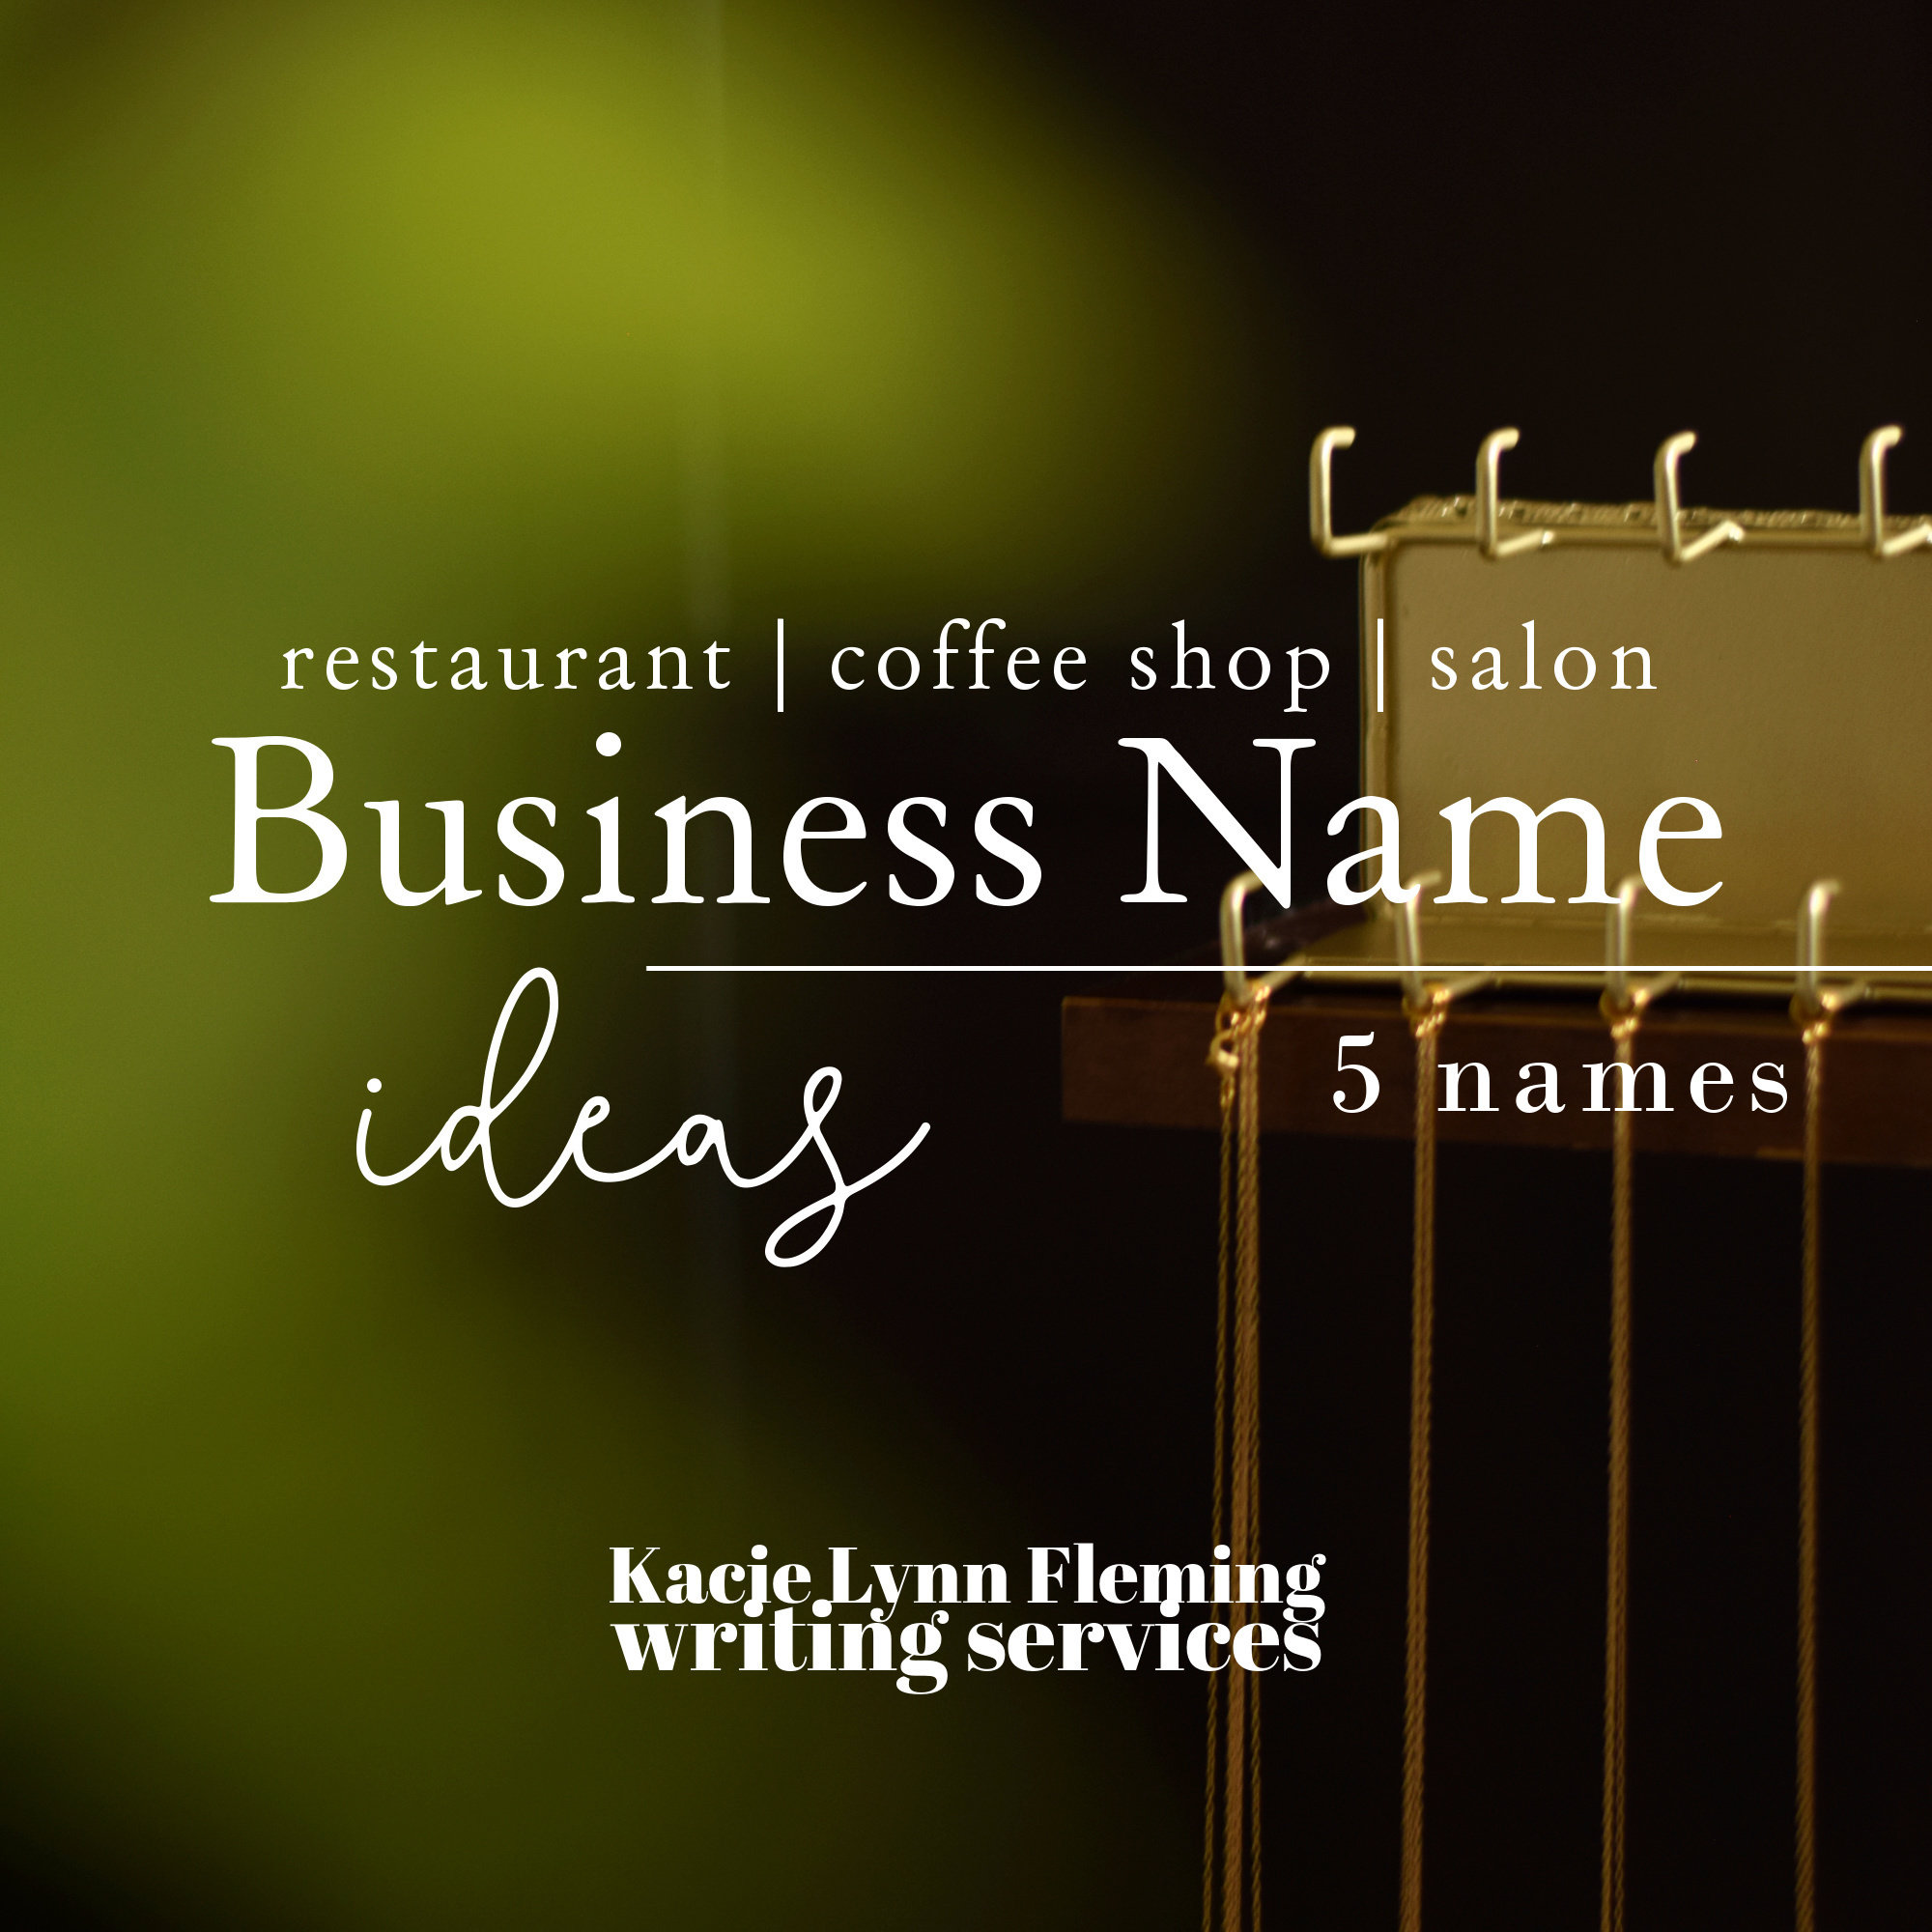 300+ Creative Restaurant Name Ideas